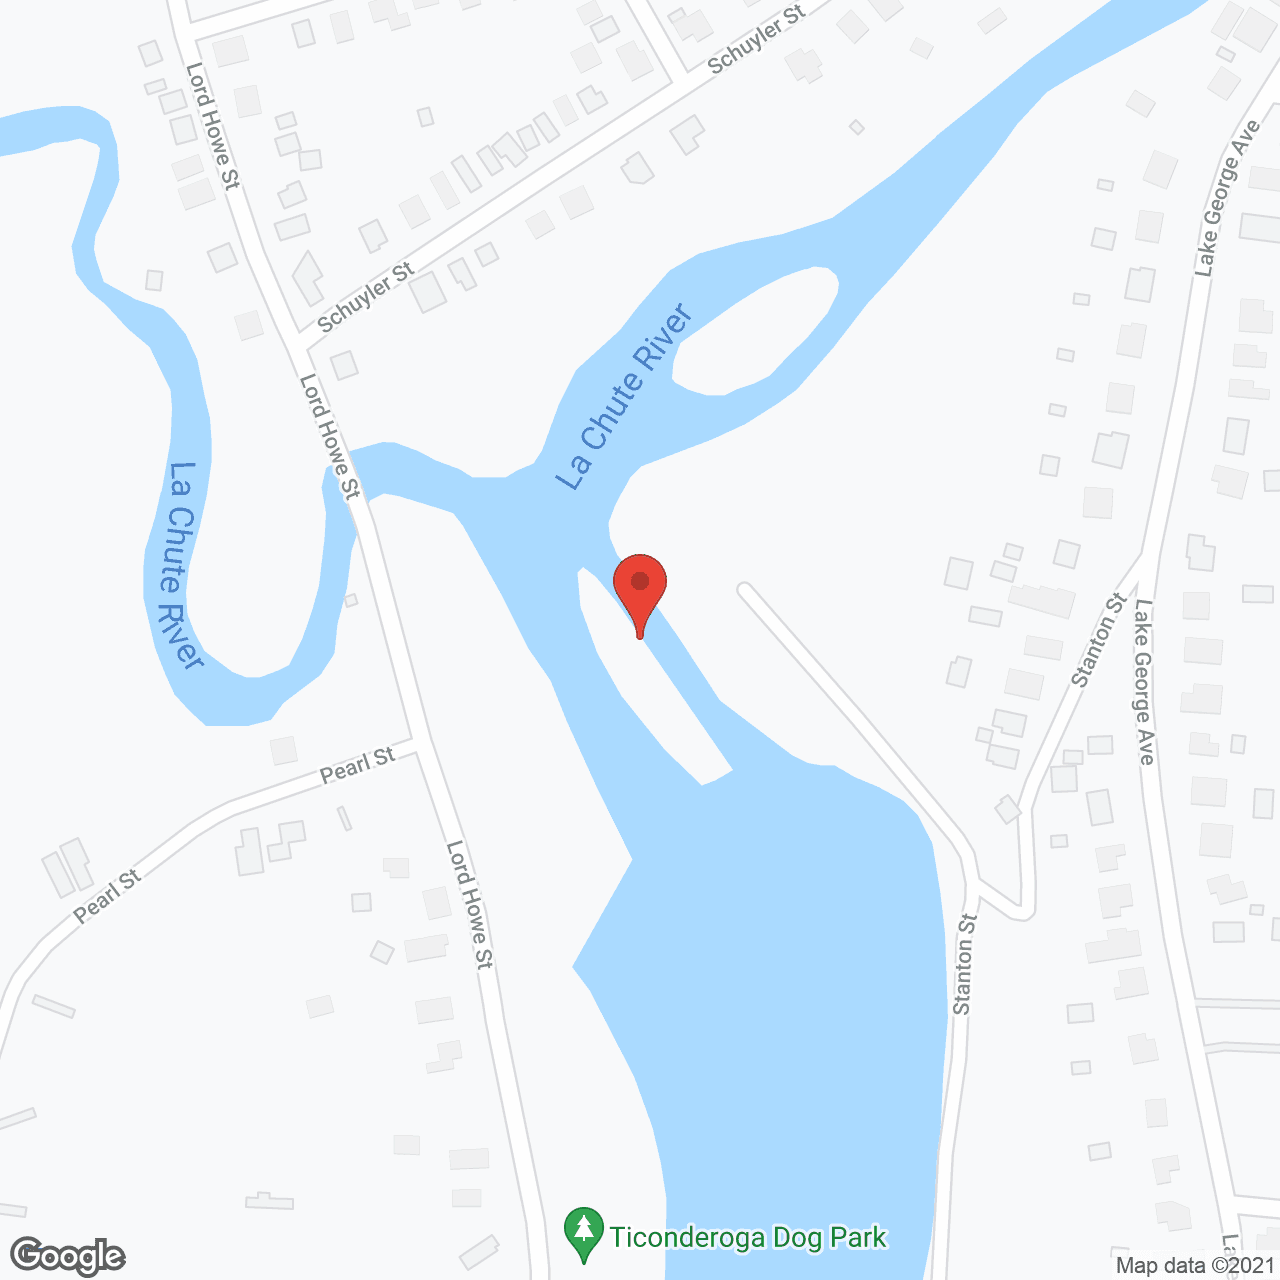 Elderwood Village at Ticonderoga in google map